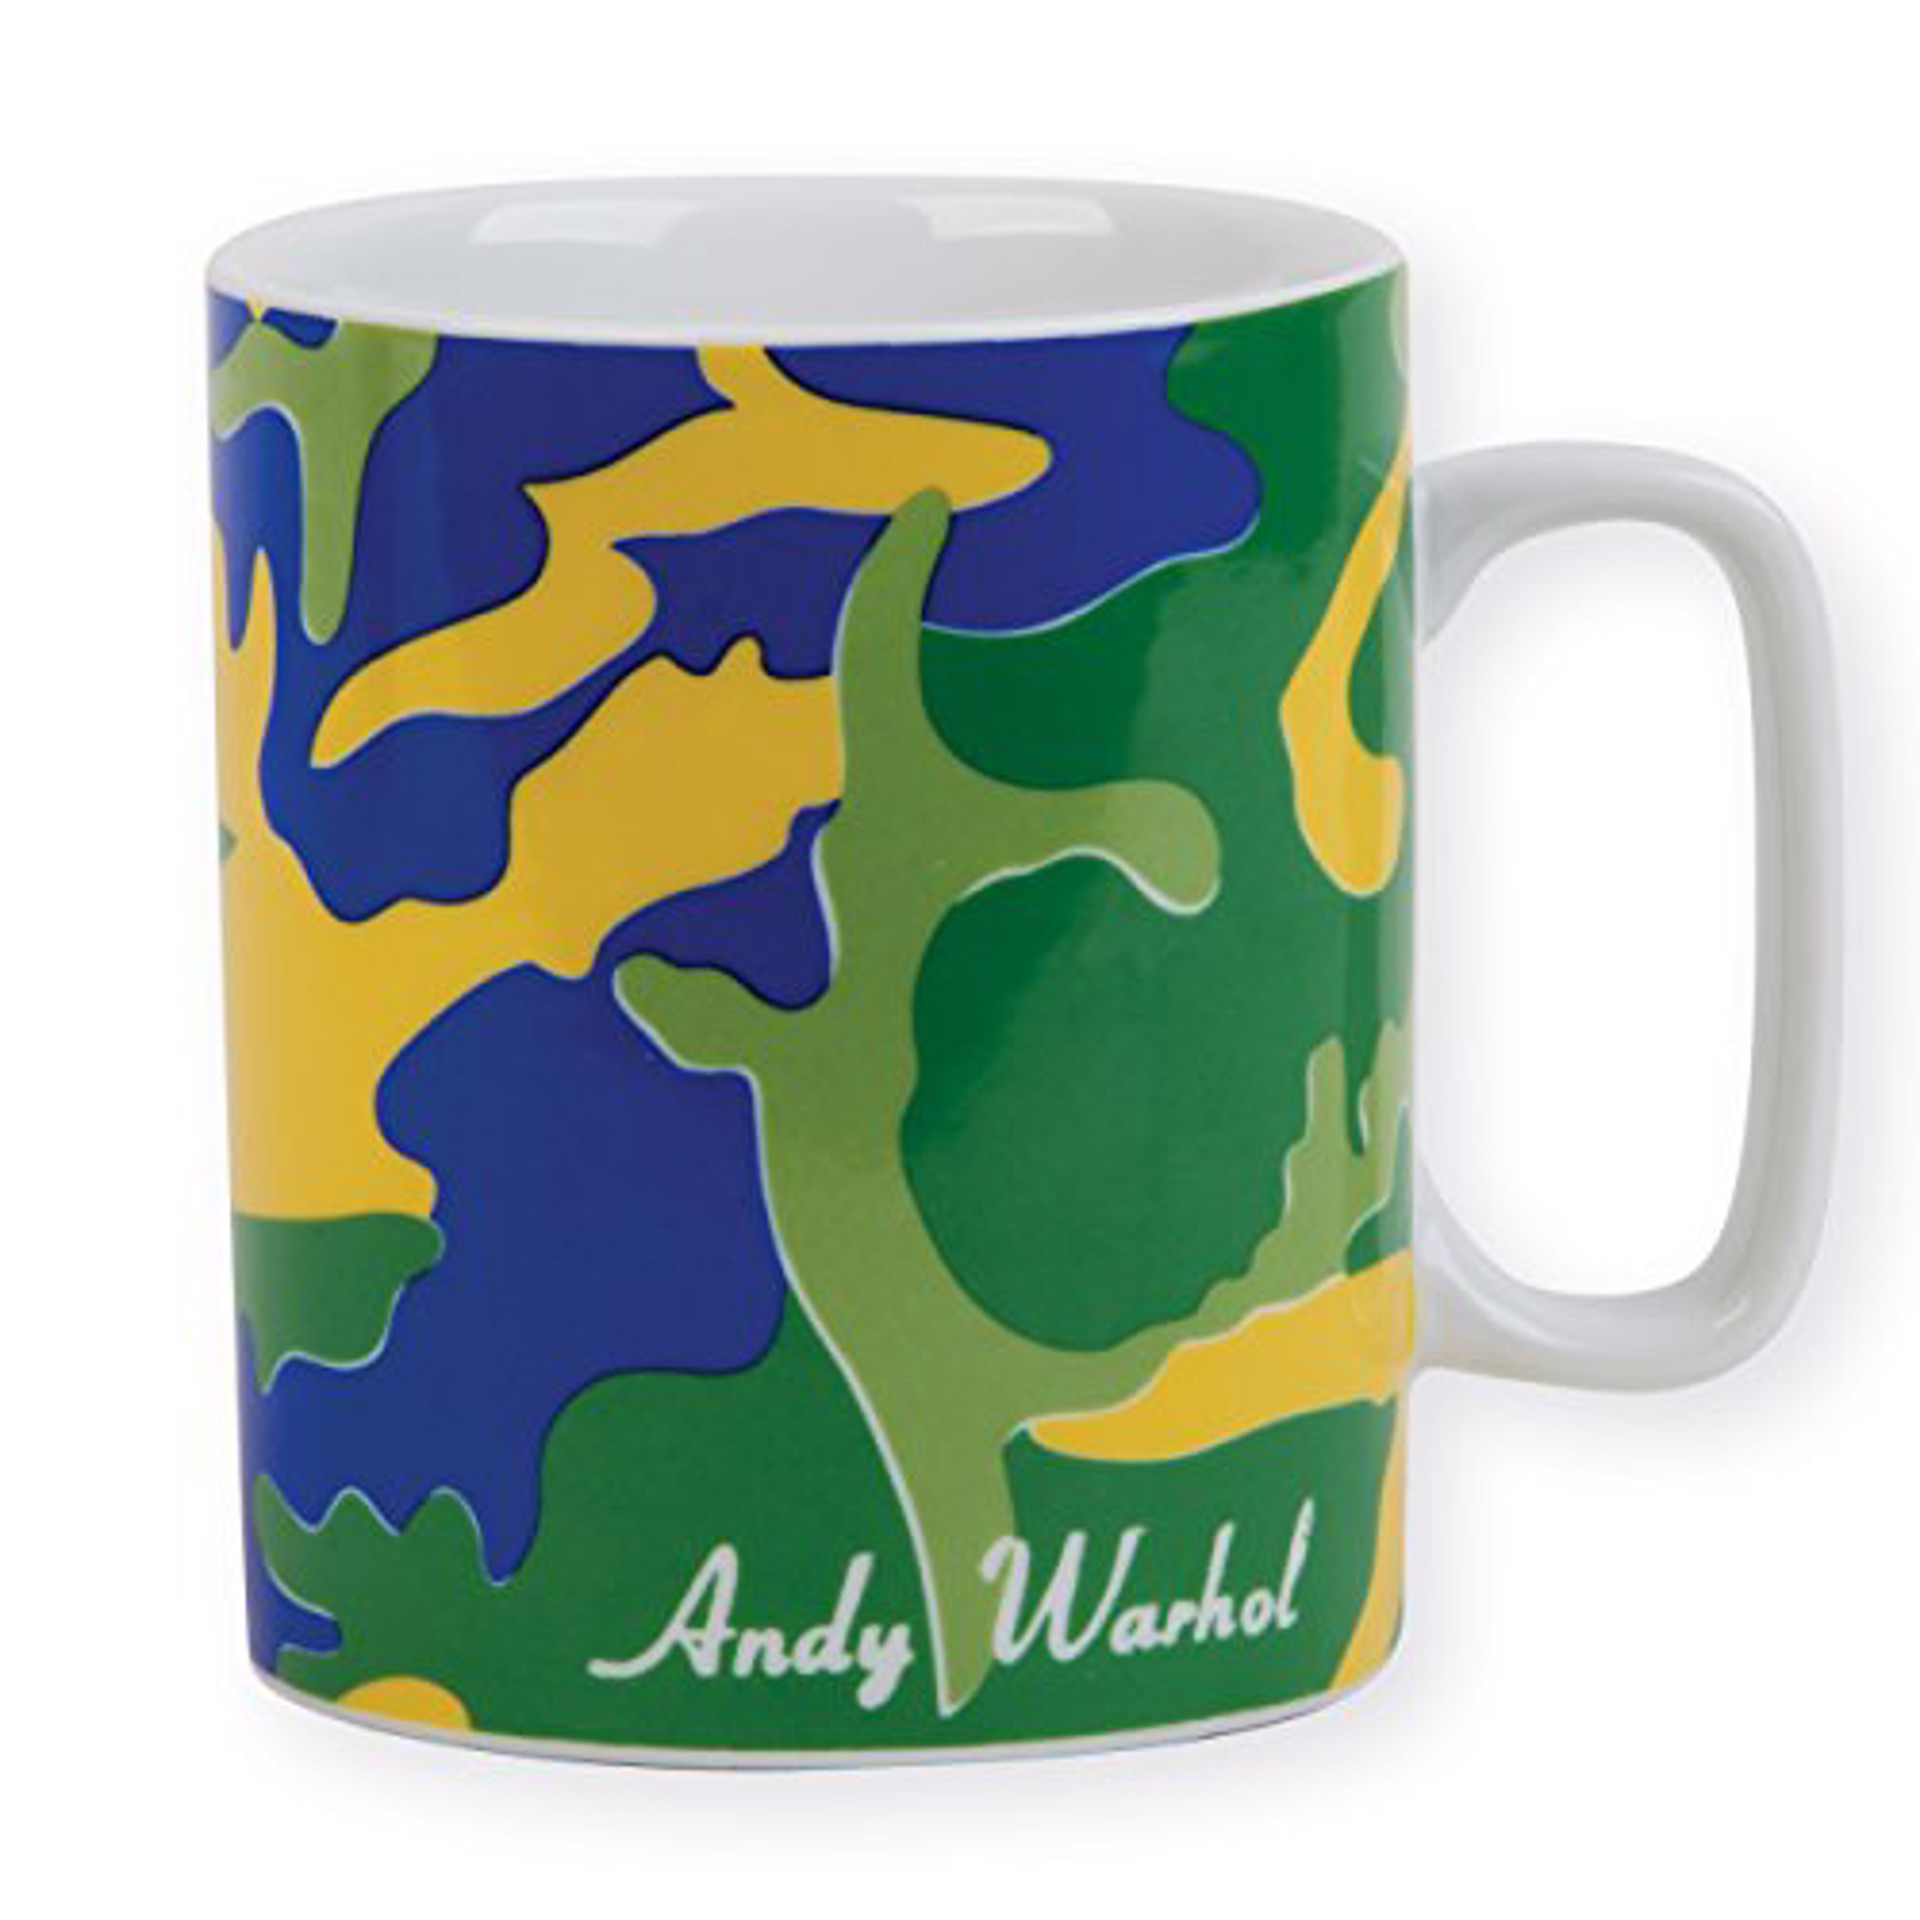 Green Camouflage Mug by Andy Warhol